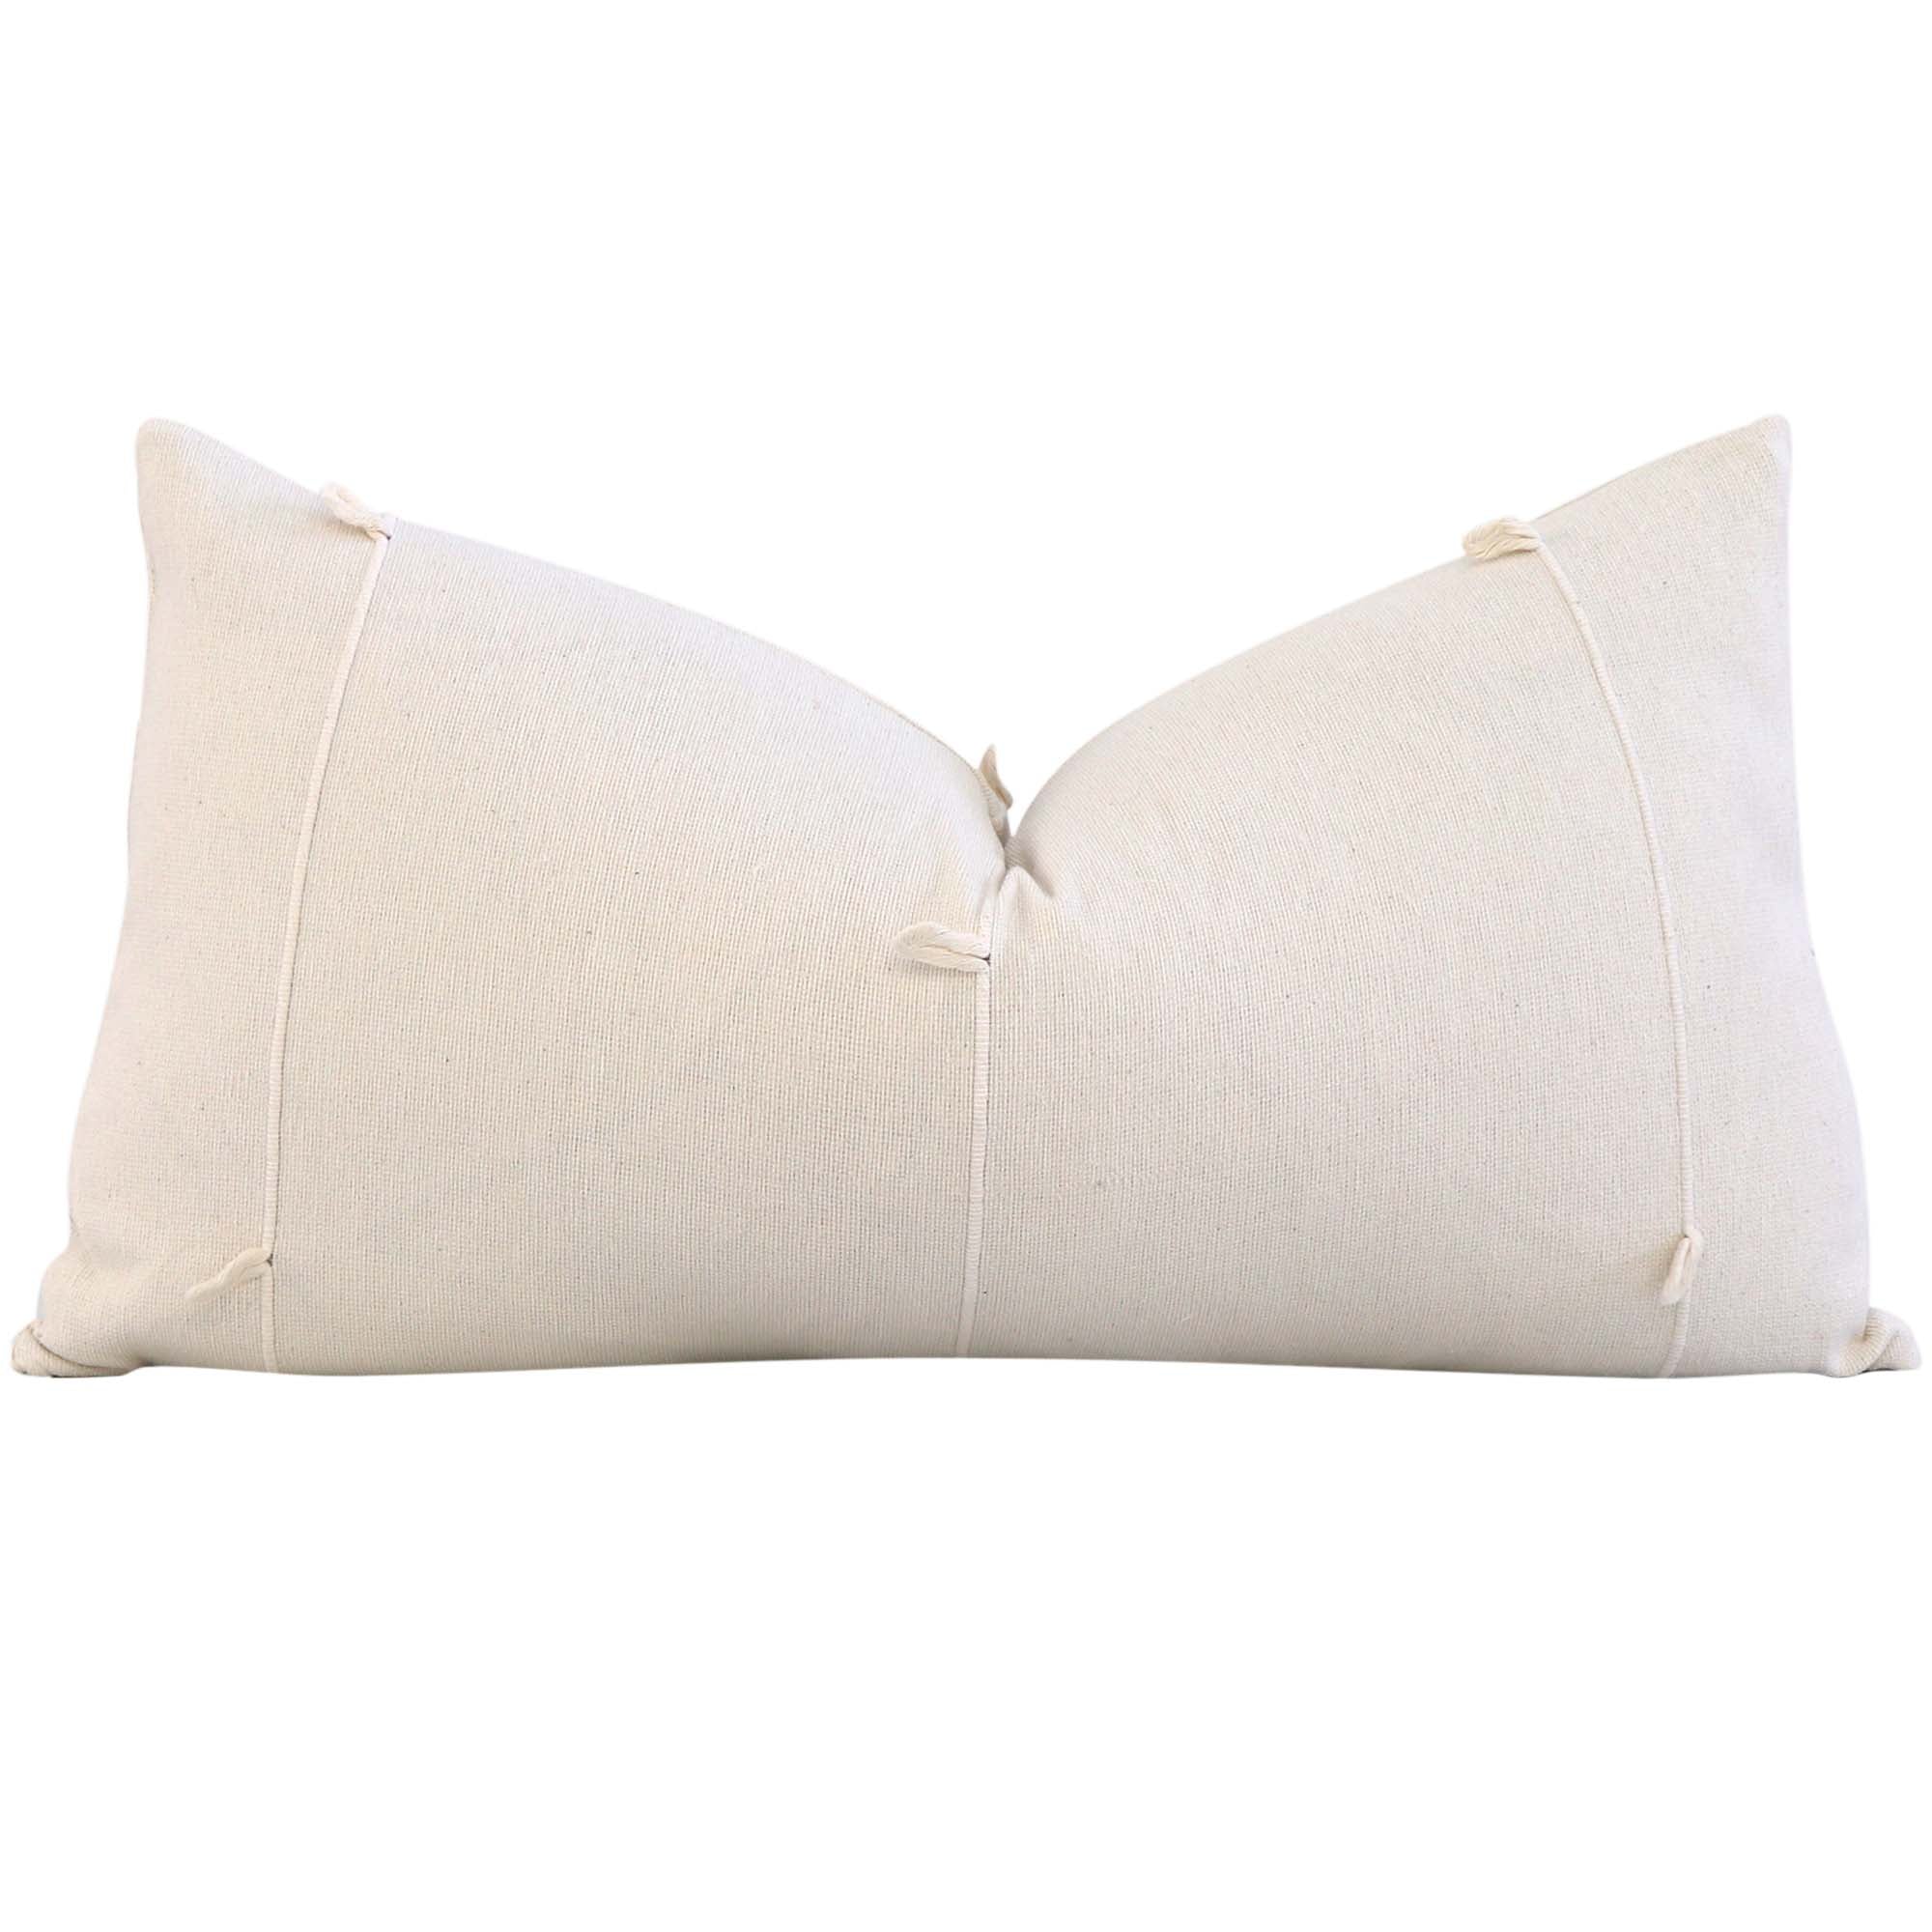 Schumacher Globo Knotted Handwoven Natural White Designer Textured Lumbar Throw Pillow Cover